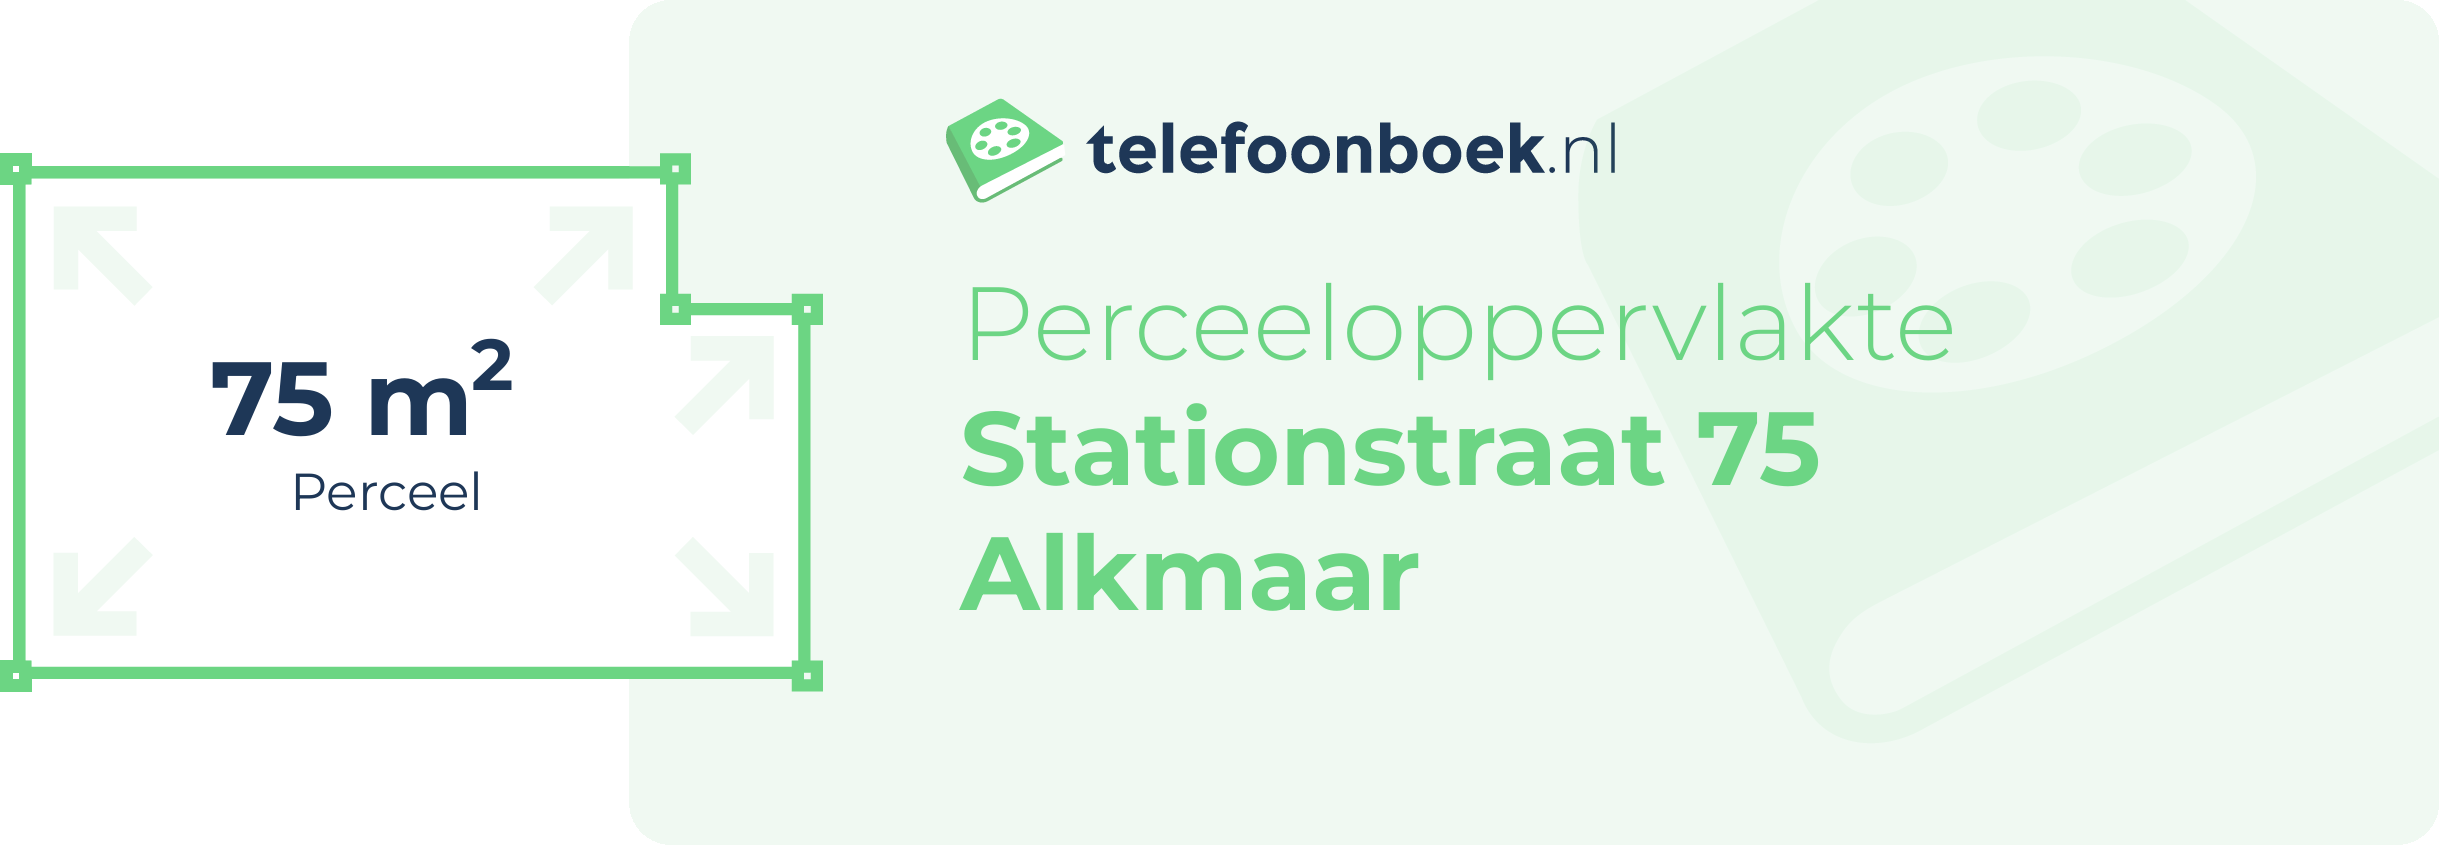 Perceeloppervlakte Stationstraat 75 Alkmaar